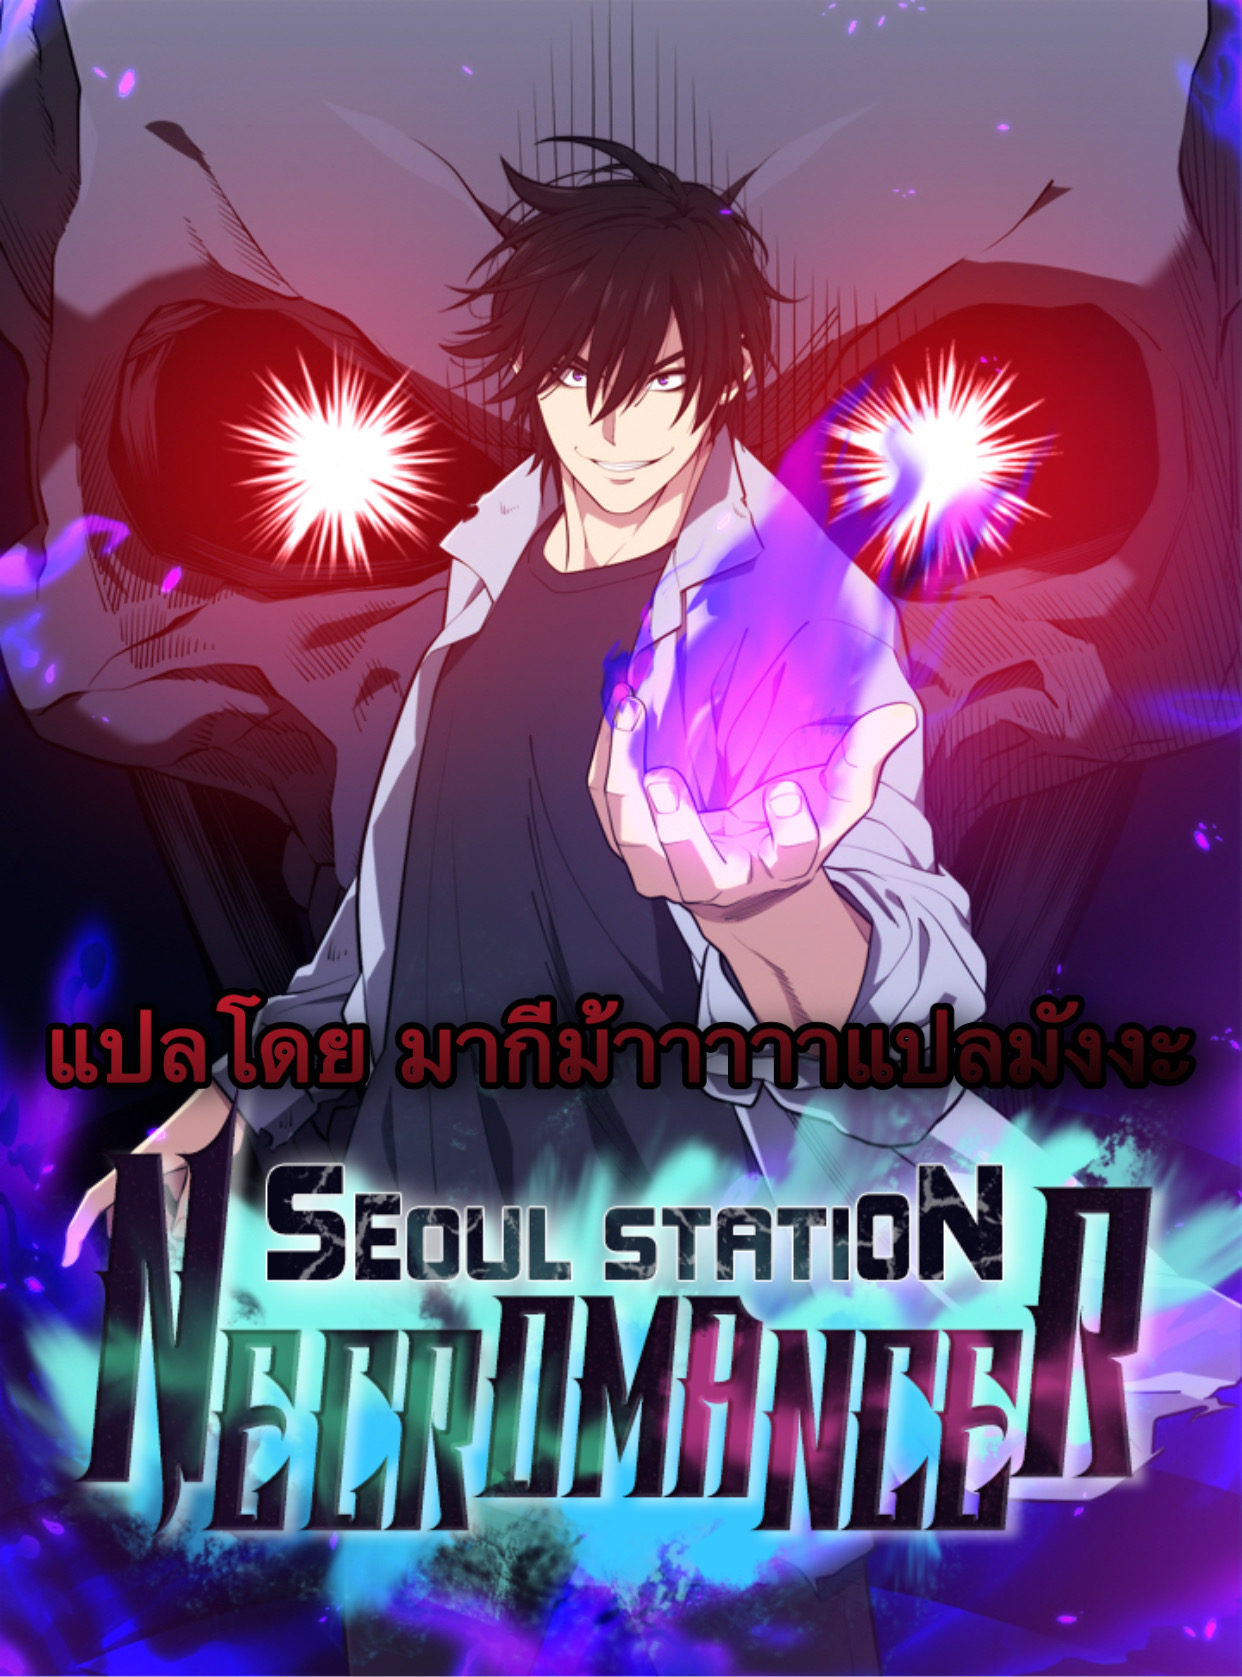 Seoul Stationâ€™s Necromancer 2 (1)